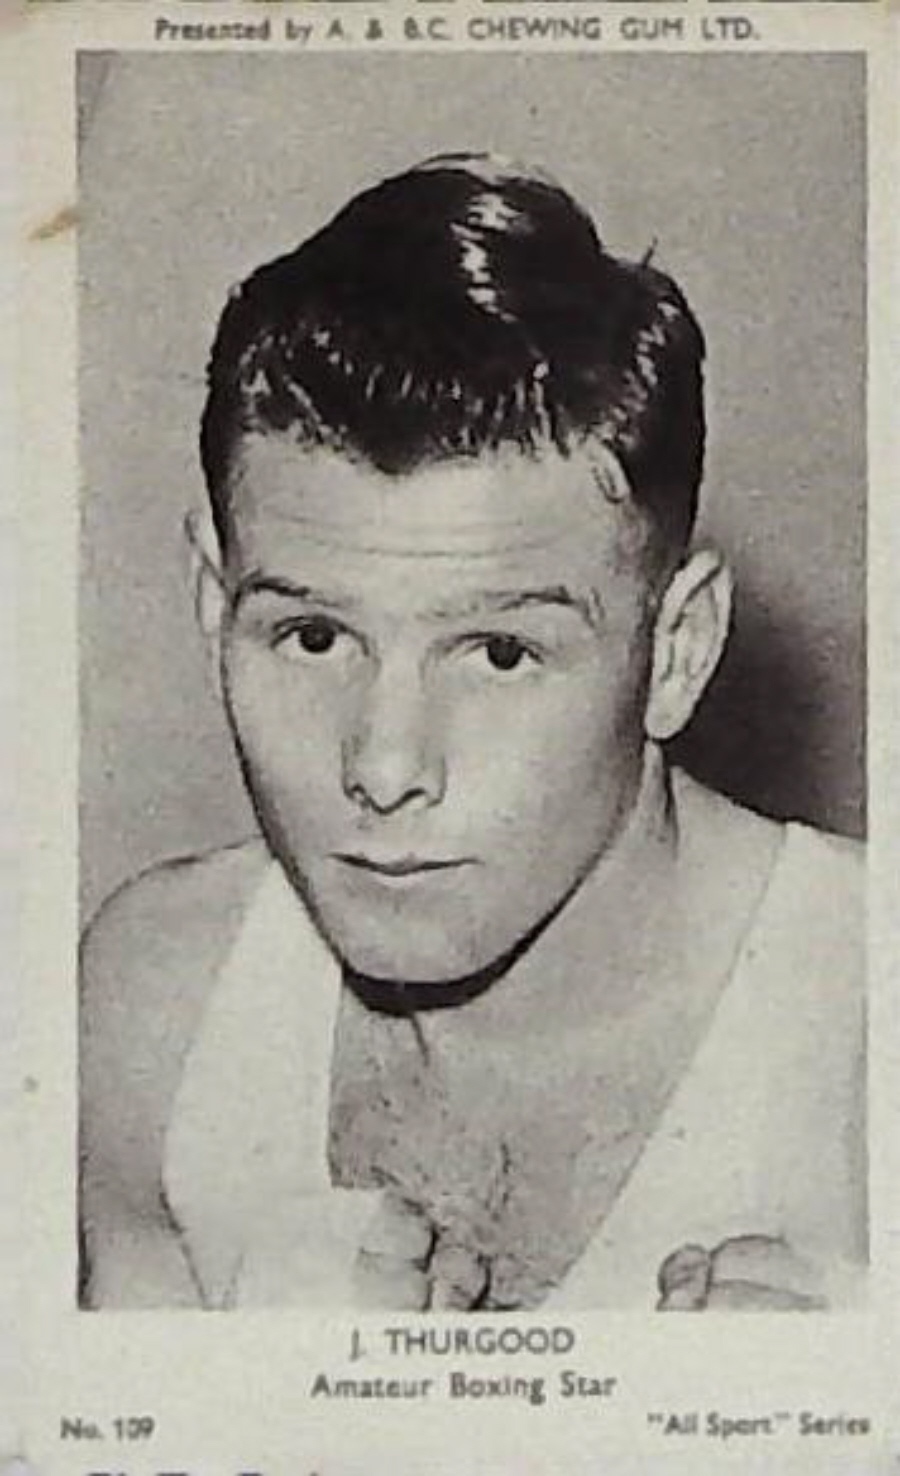 A & B C 1954 All Sports Boxing J Thurgood Amateur Star No 109